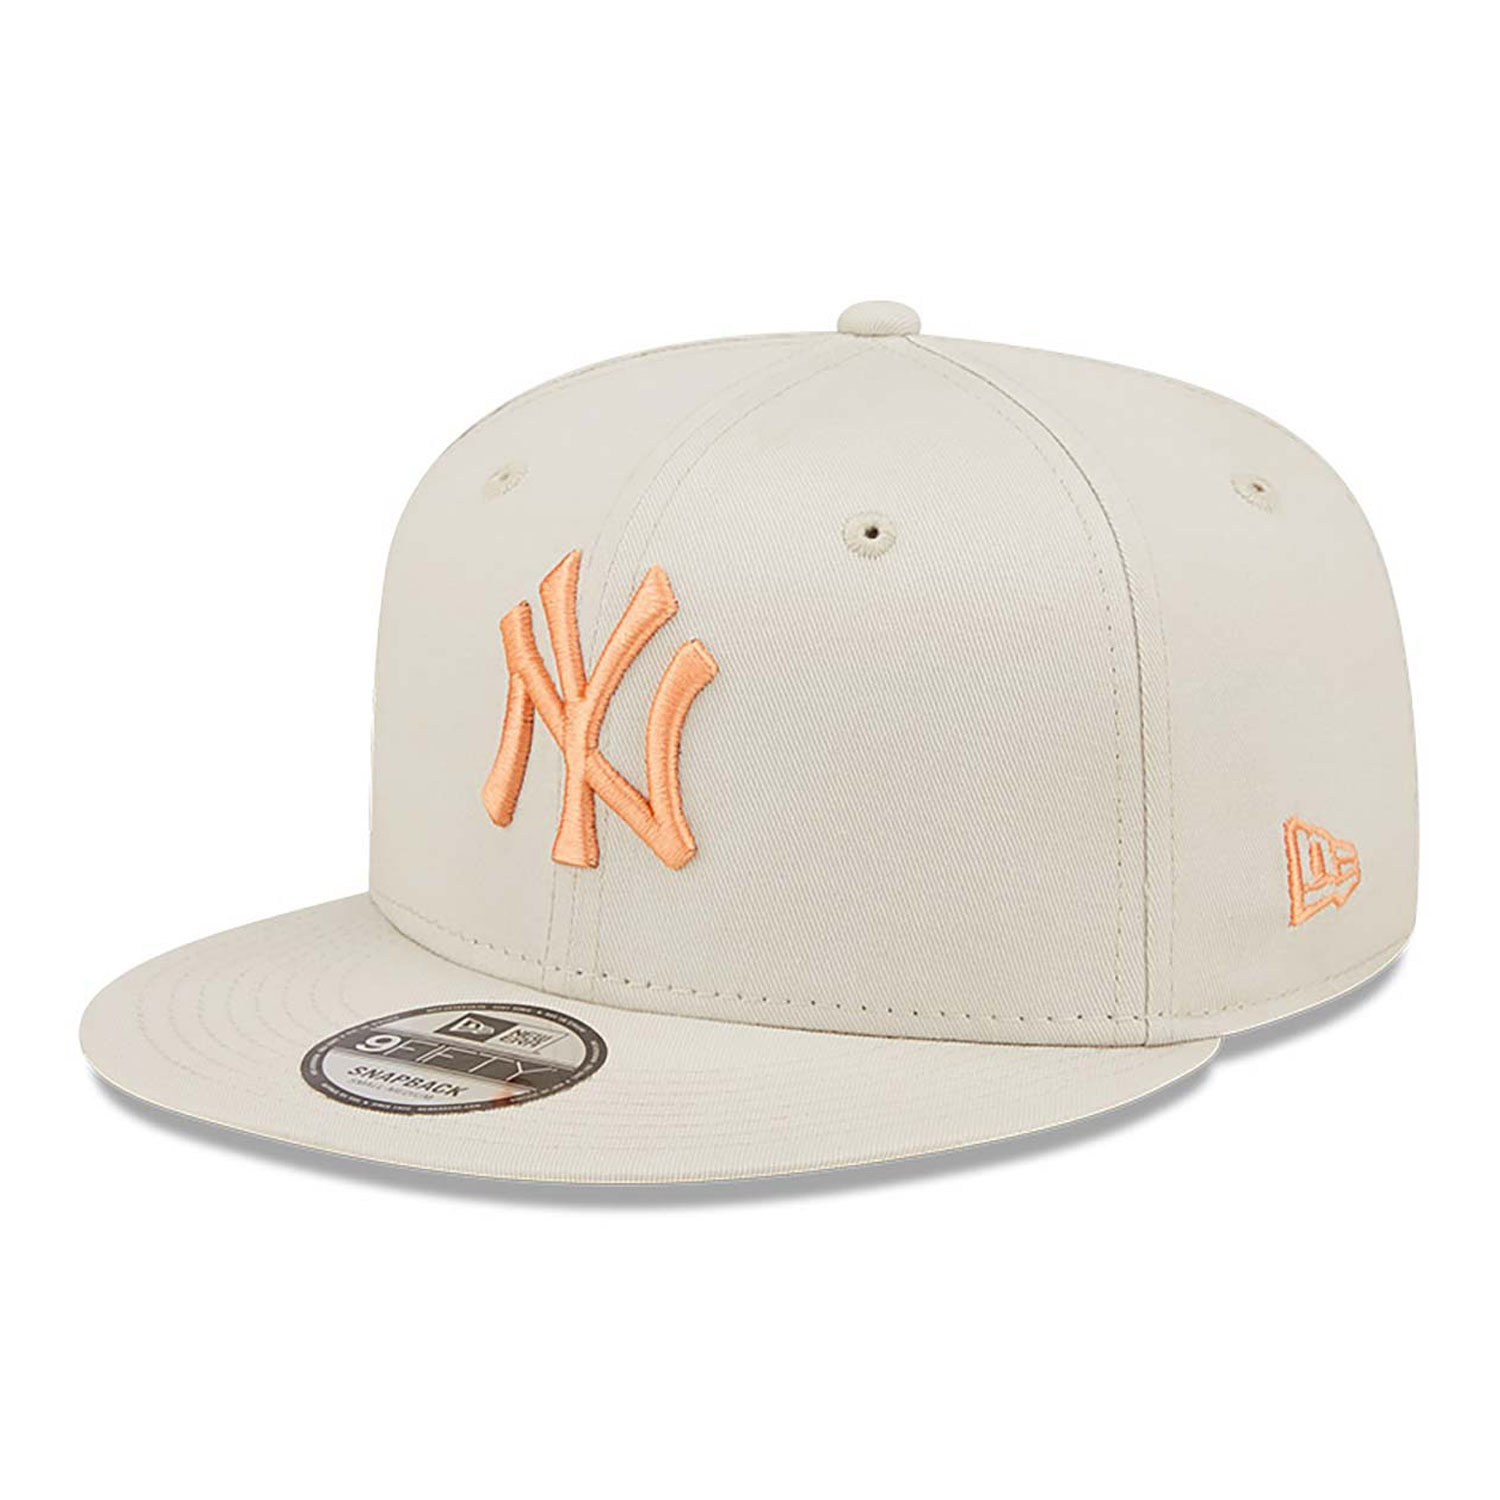 New York Yankees League Essential Cream 9FIFTY Snapback Cap